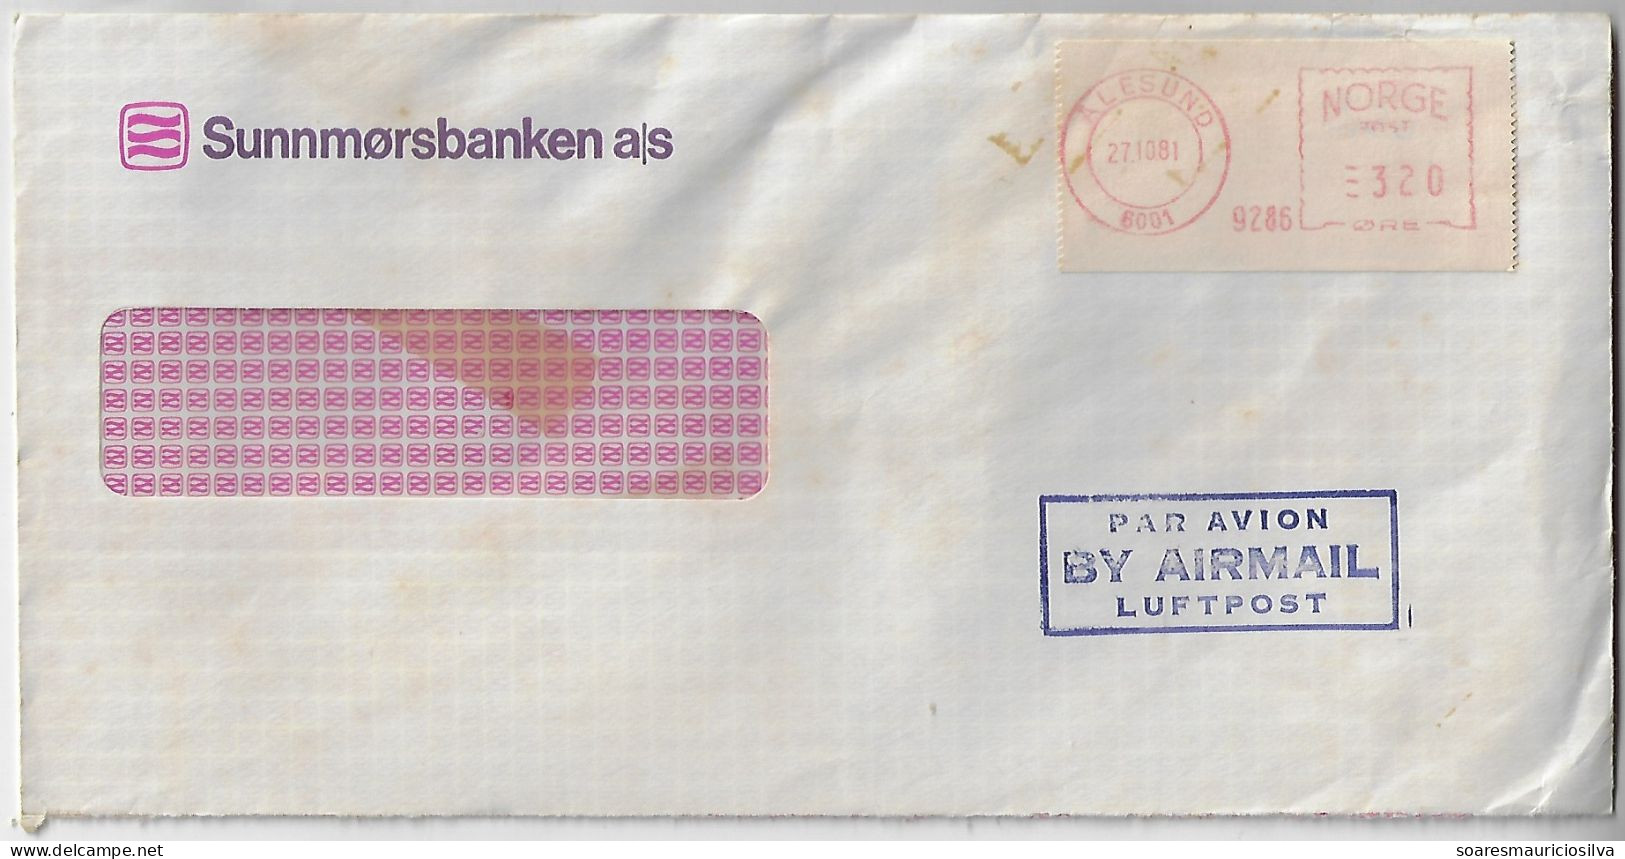 Norway 1981 Sunnmørsbanken airmail Cover Sent From Alesund Meter Stamp Pitney Bowes "5000" - Storia Postale